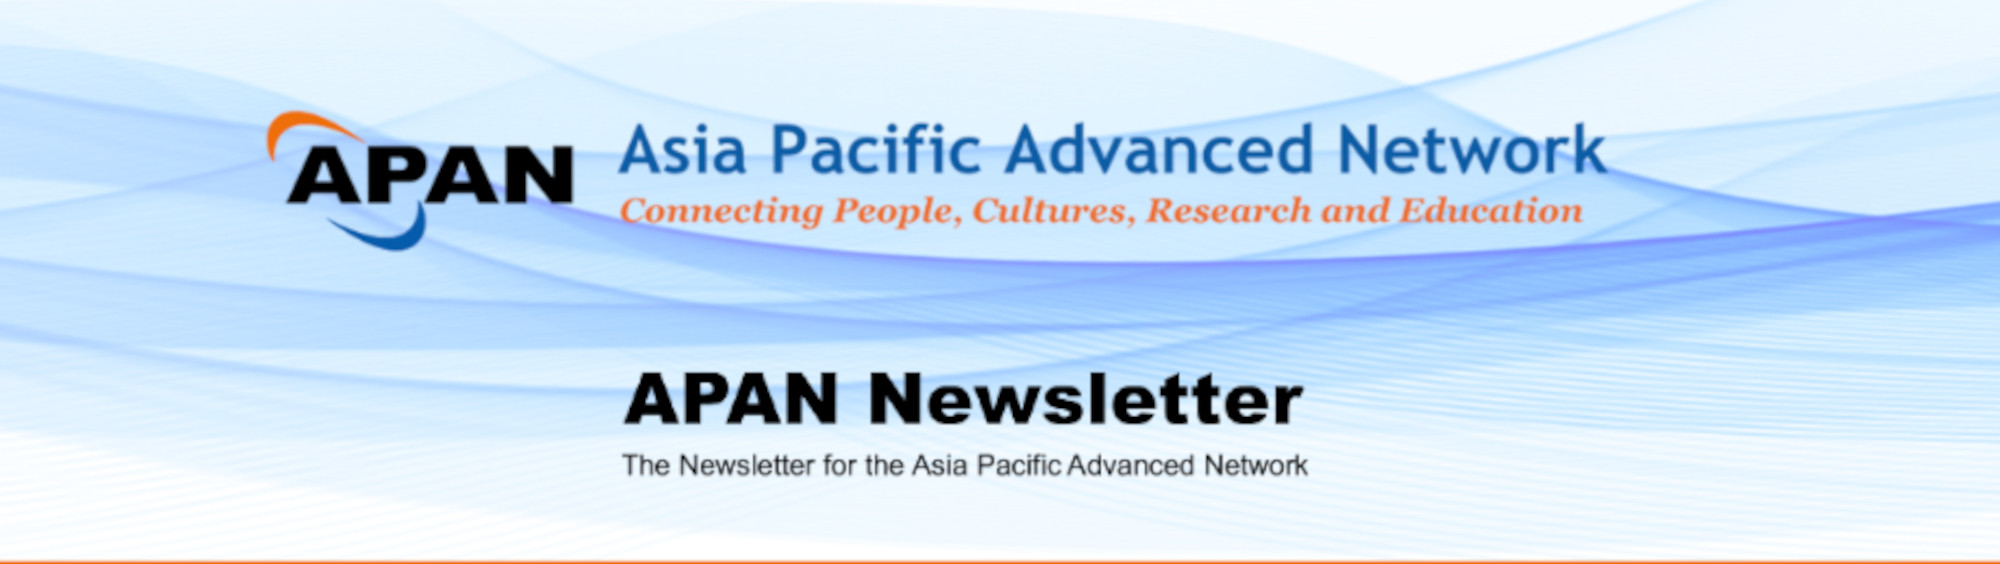 BdREN Highlights on APAN Newsletter